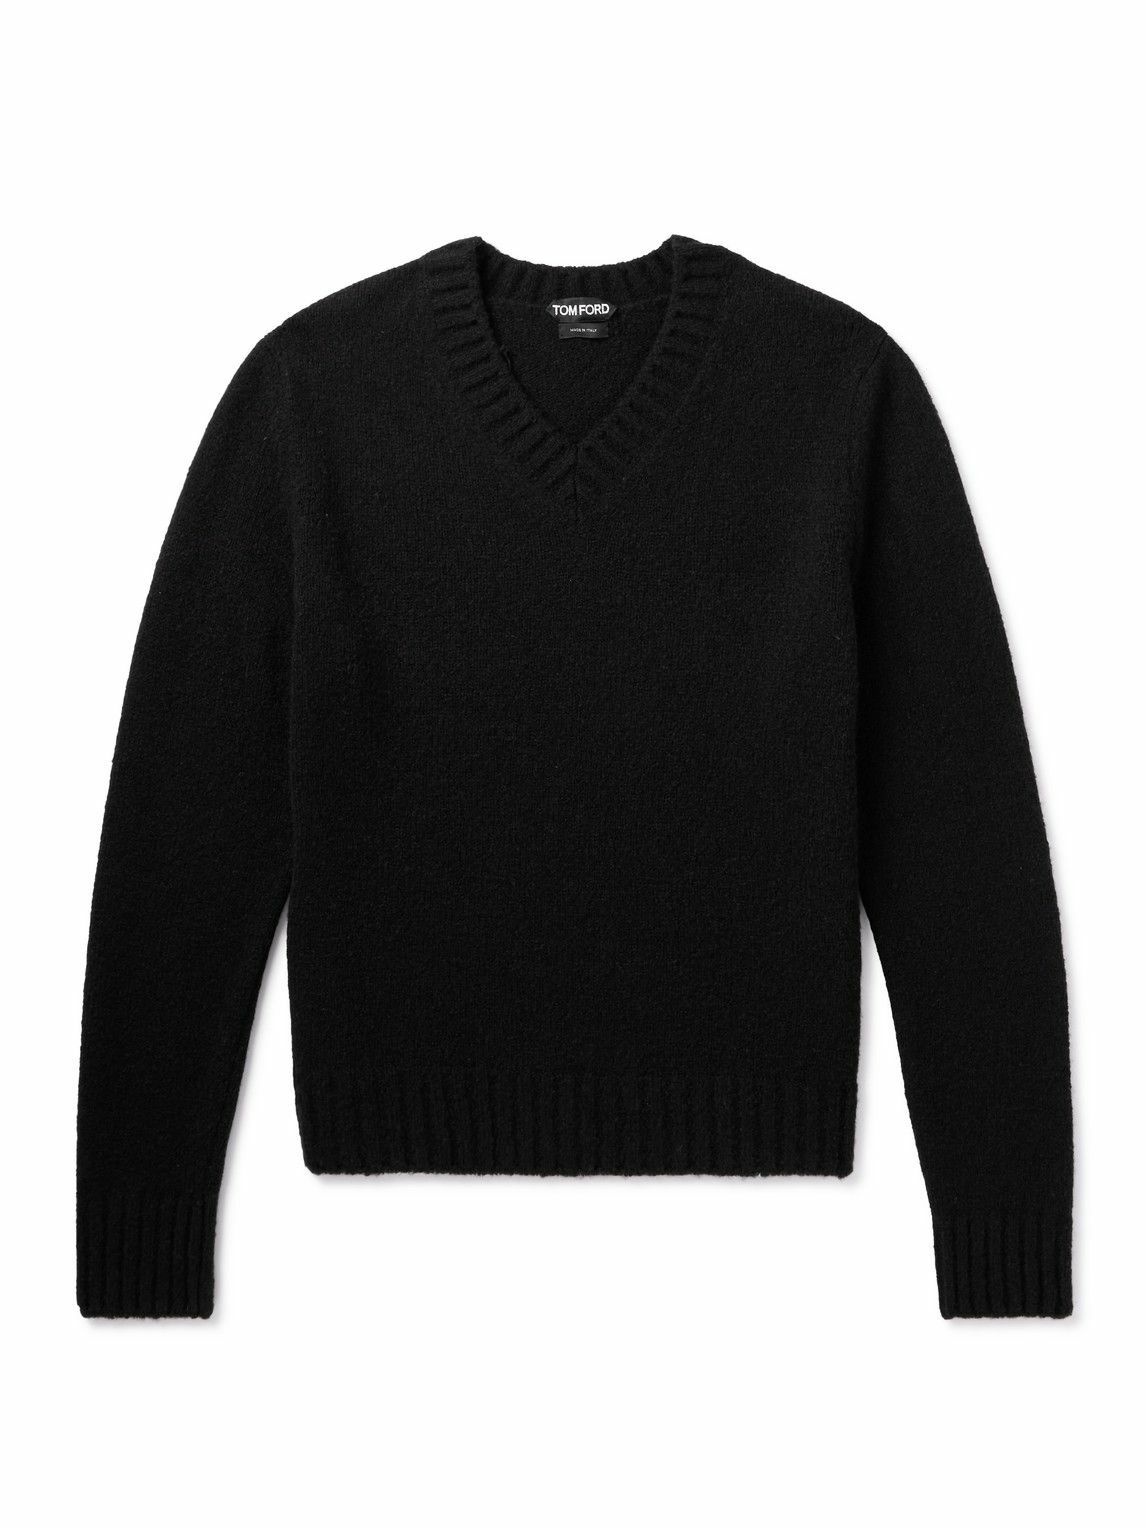 TOM FORD - Cashmere-Blend Sweater - Black TOM FORD